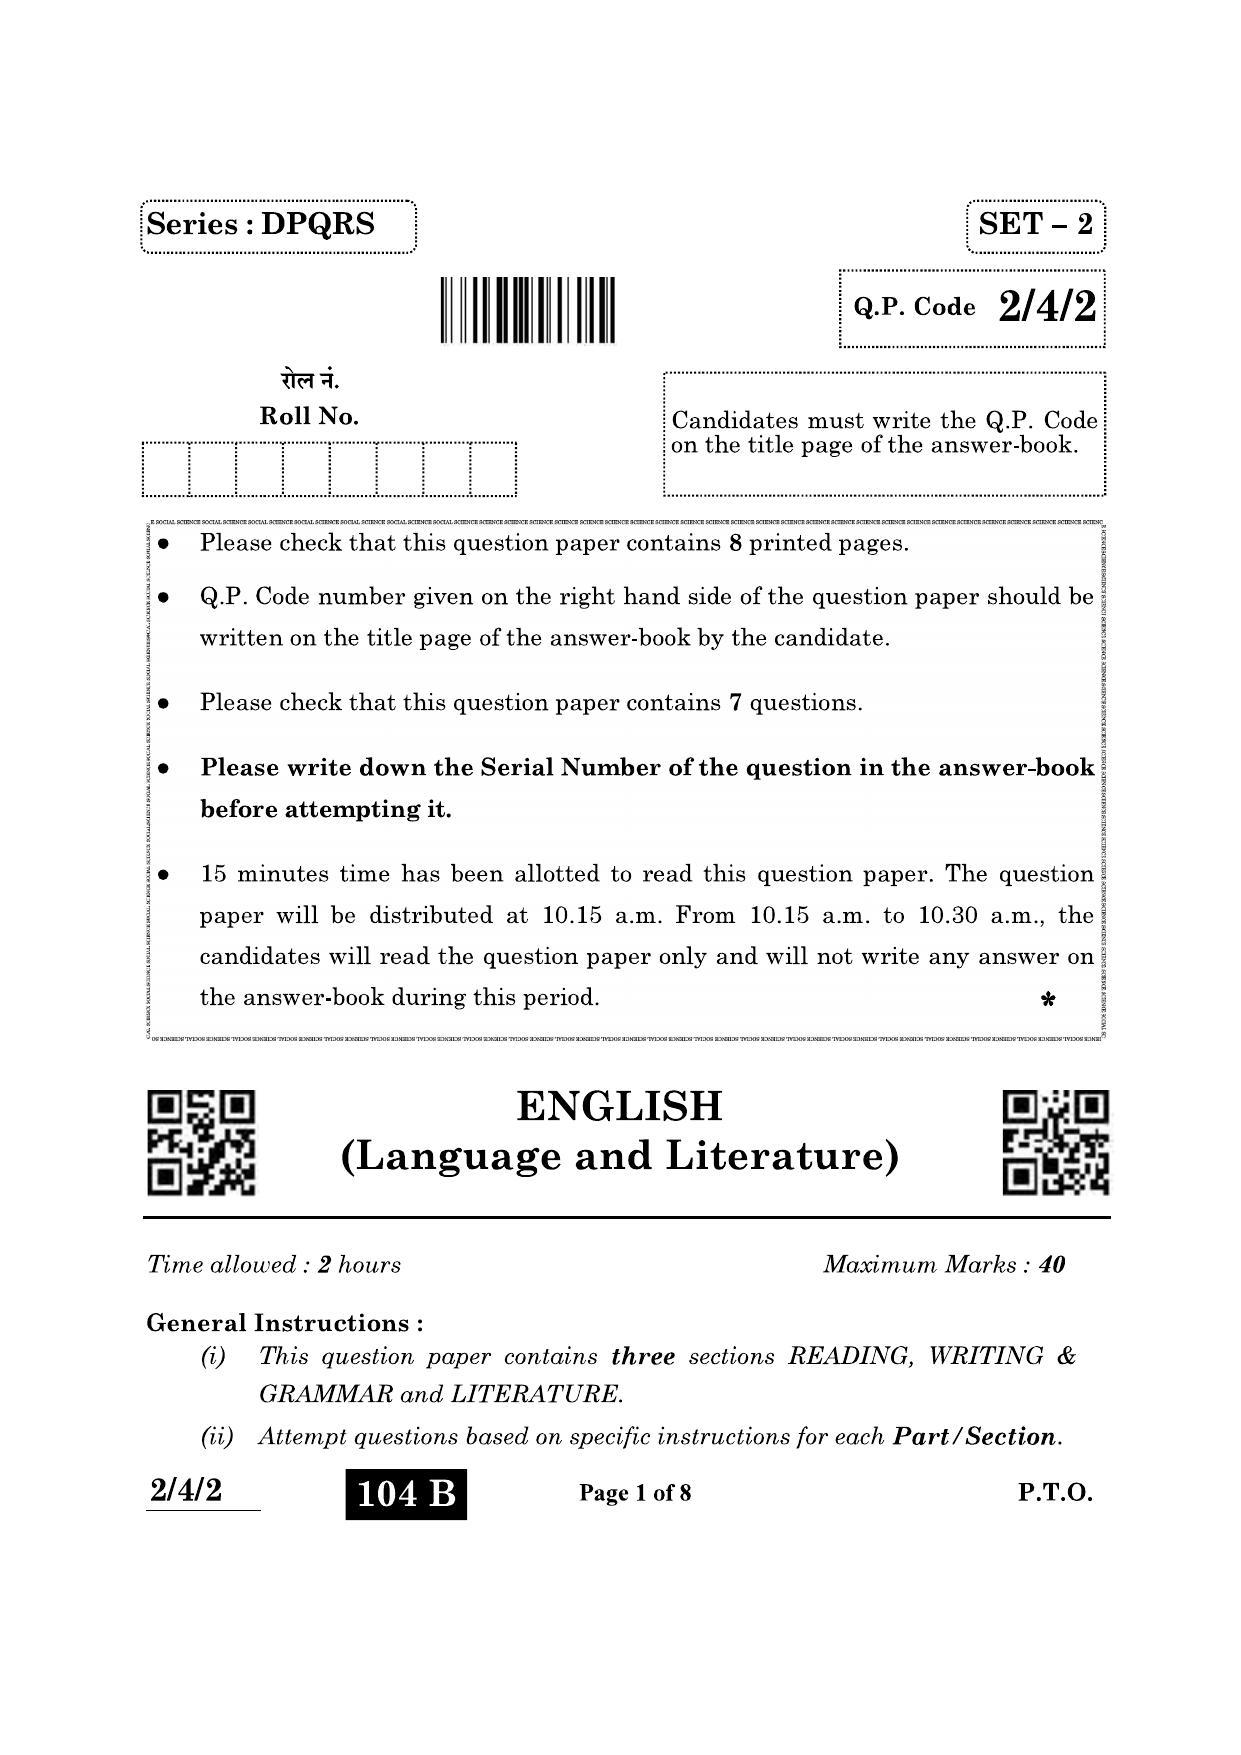 CBSE Class 10 2-4-2 (English L & L) 2022 Question Paper - Page 1